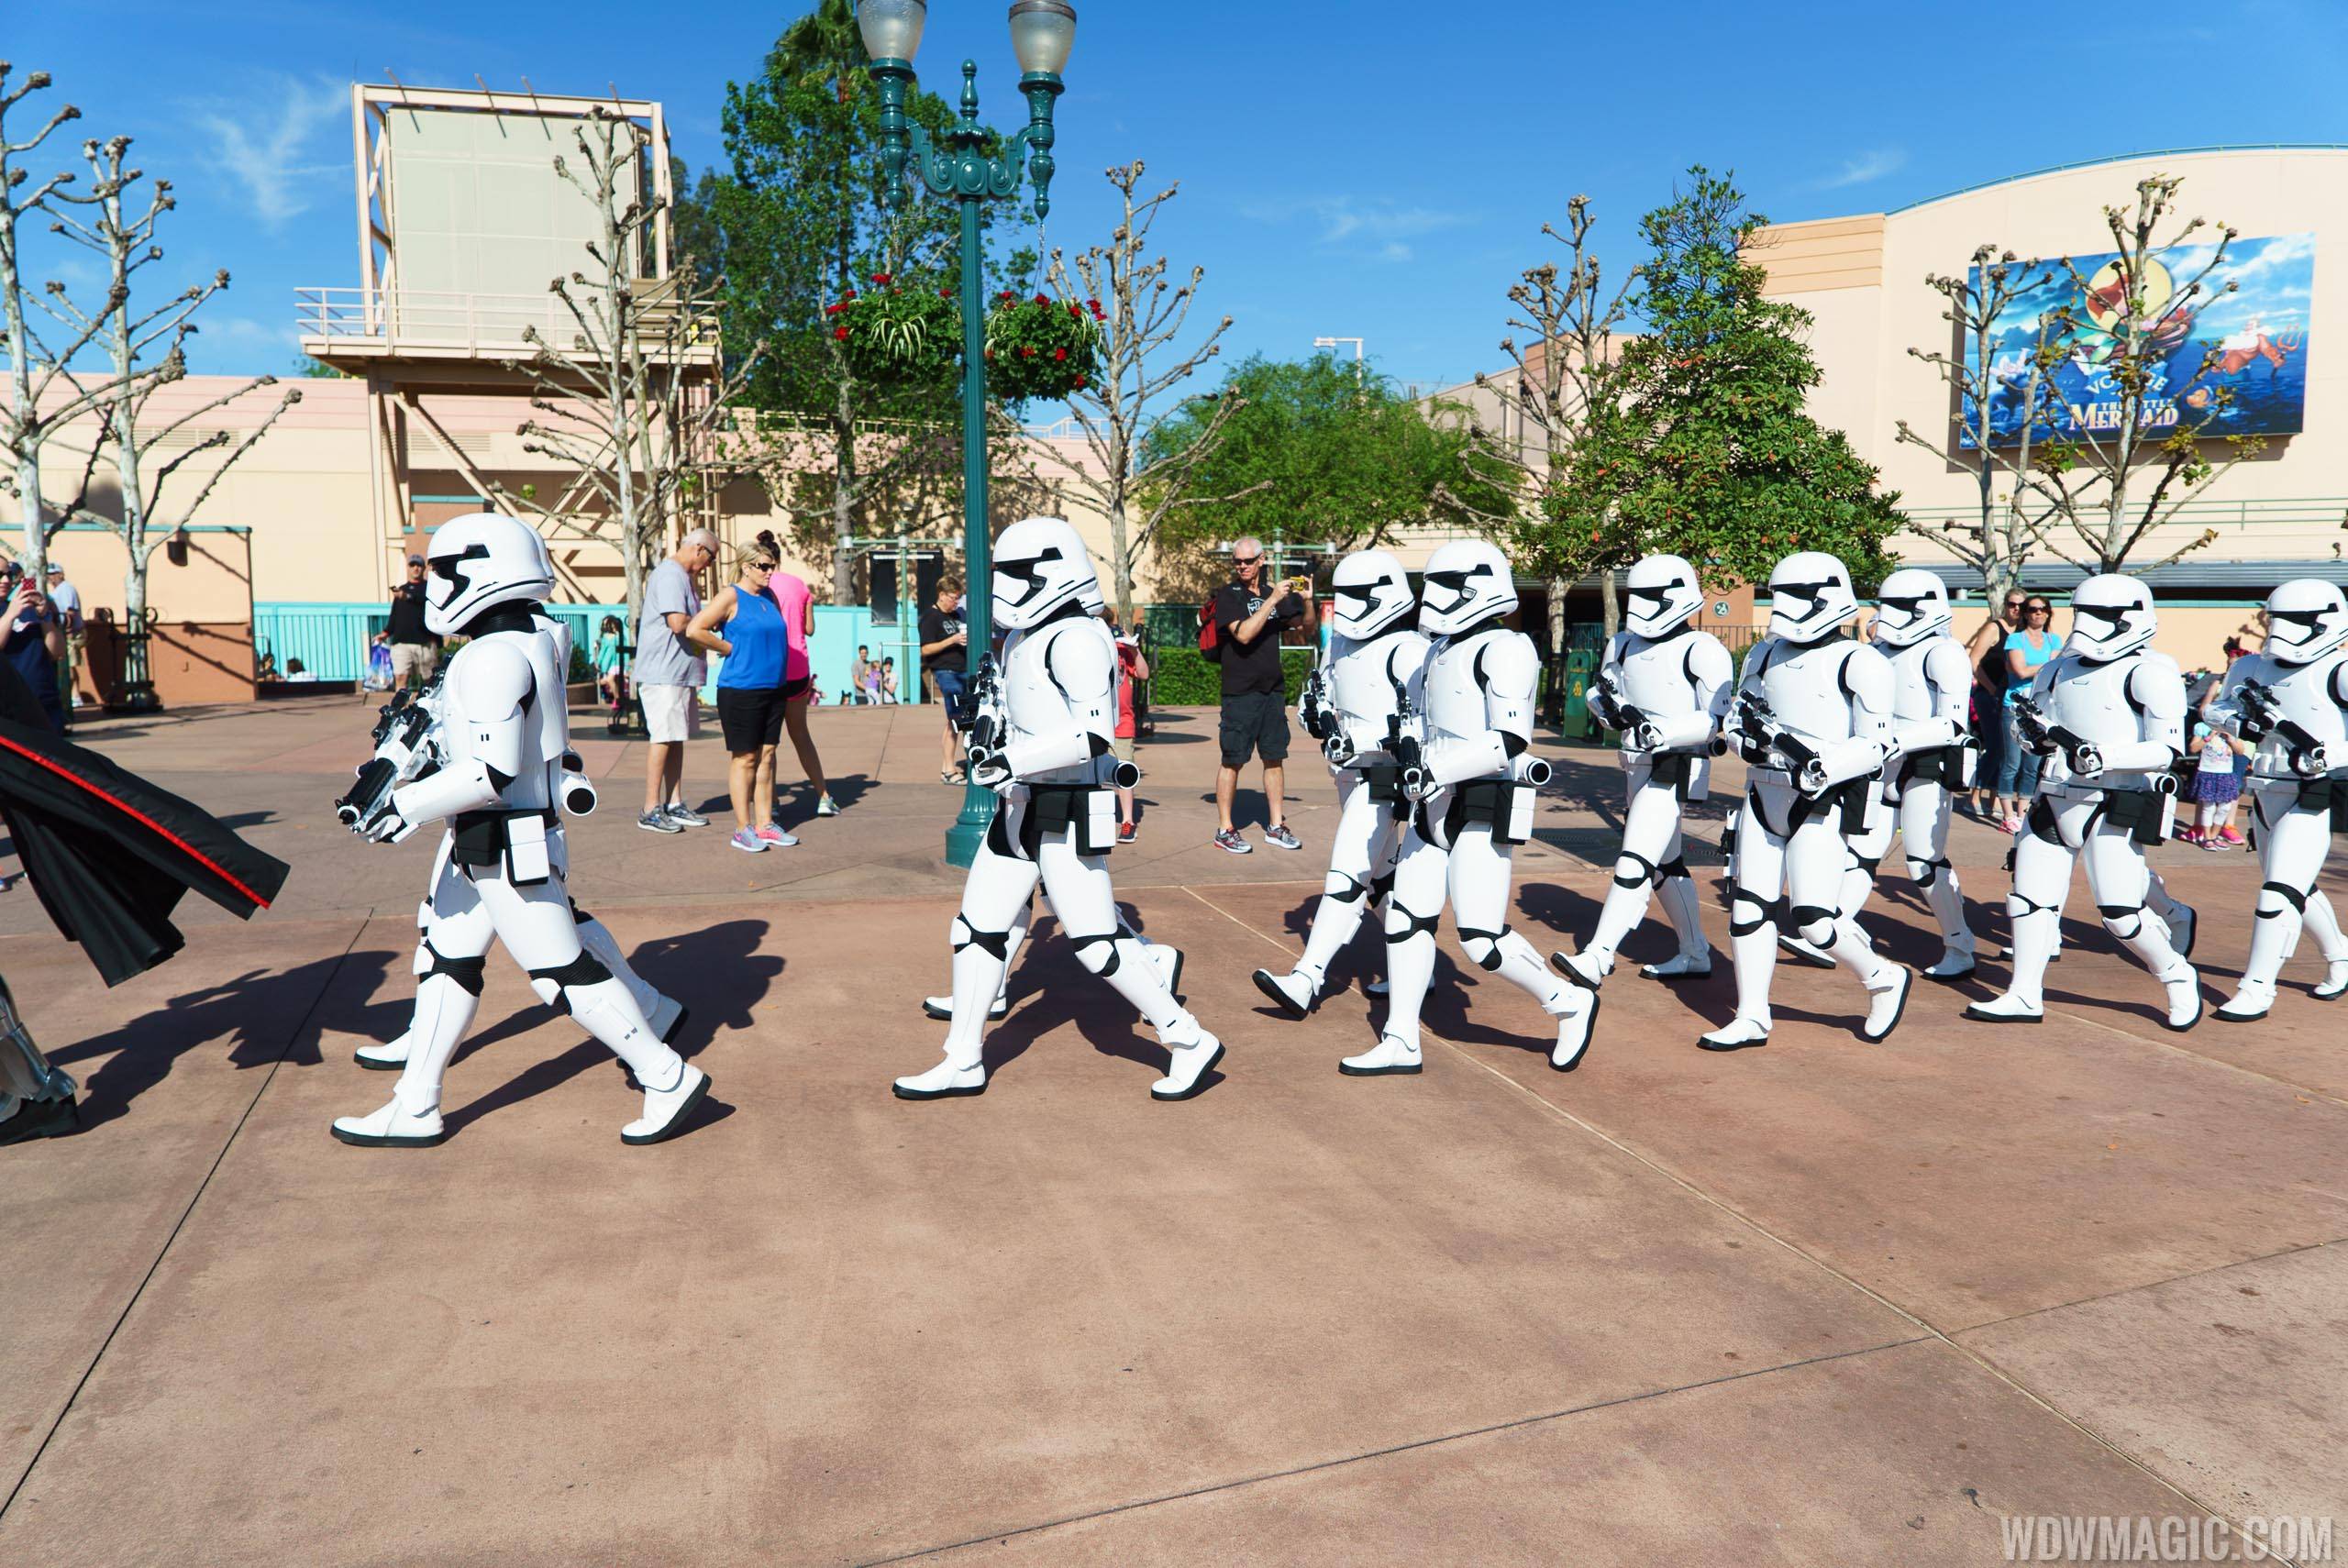 Star Wars Captain Phasma Stormtrooper March